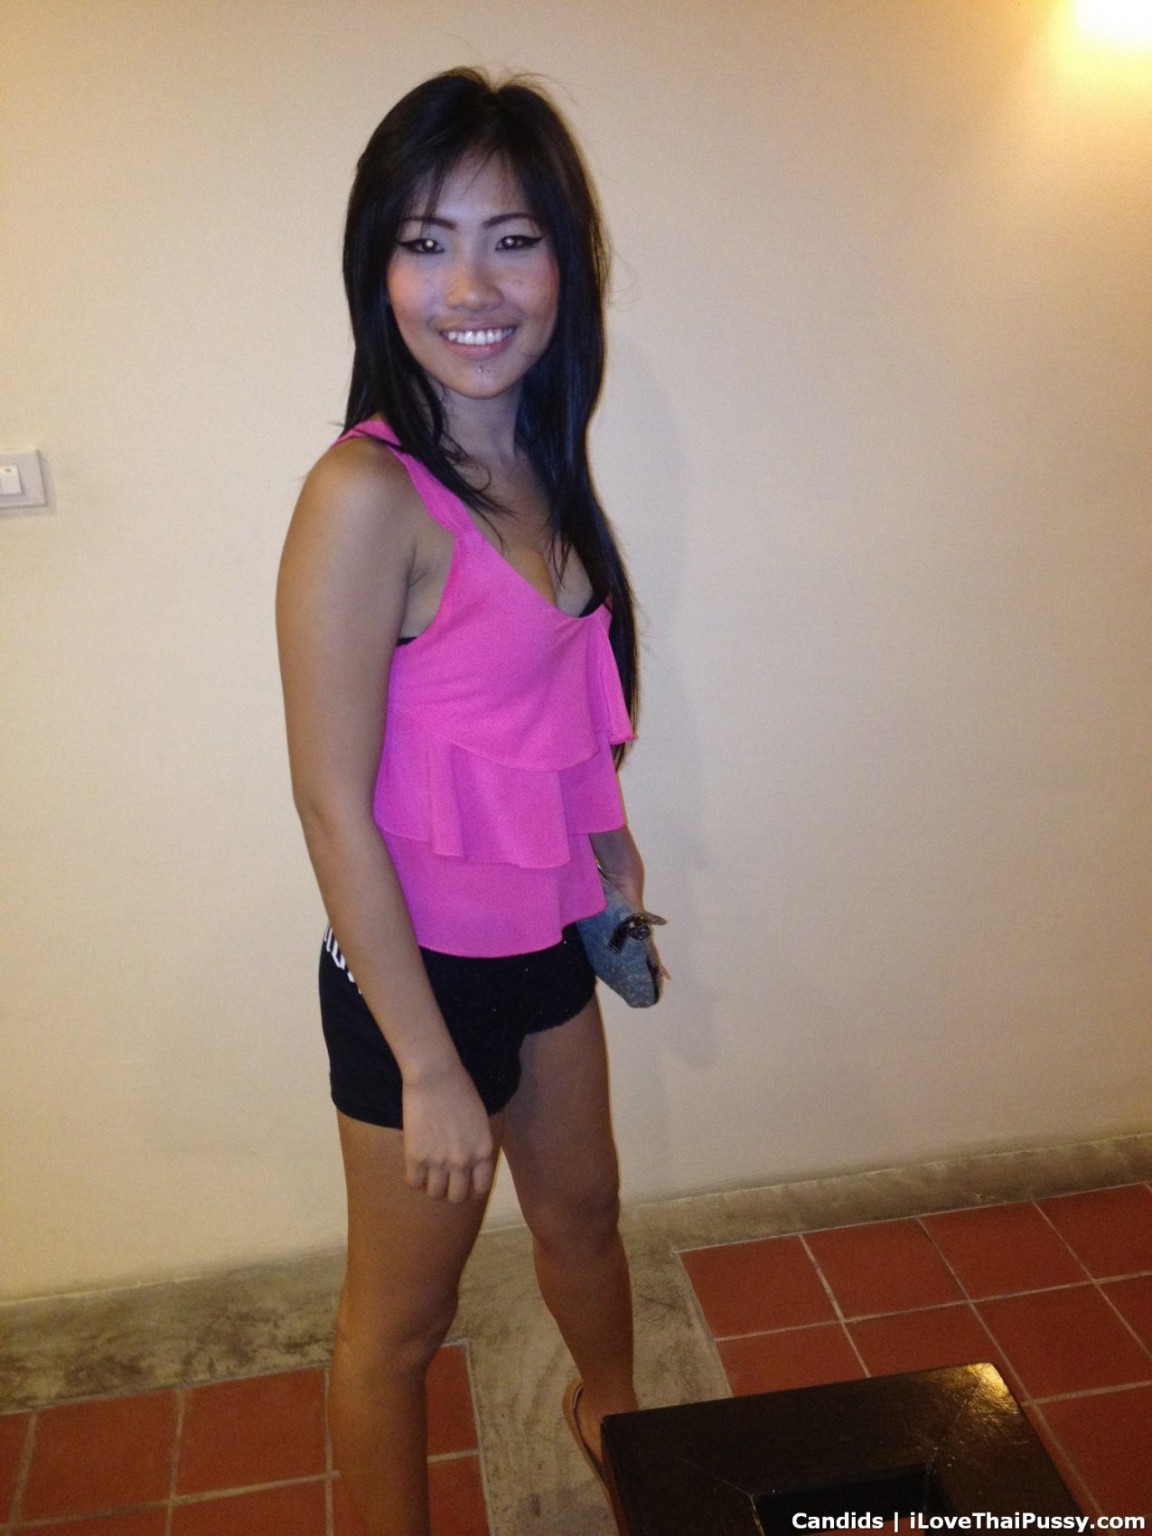 Calda showgirl thailandese scopata senza preservativo come una sporca puttana asiatica
 #67943068